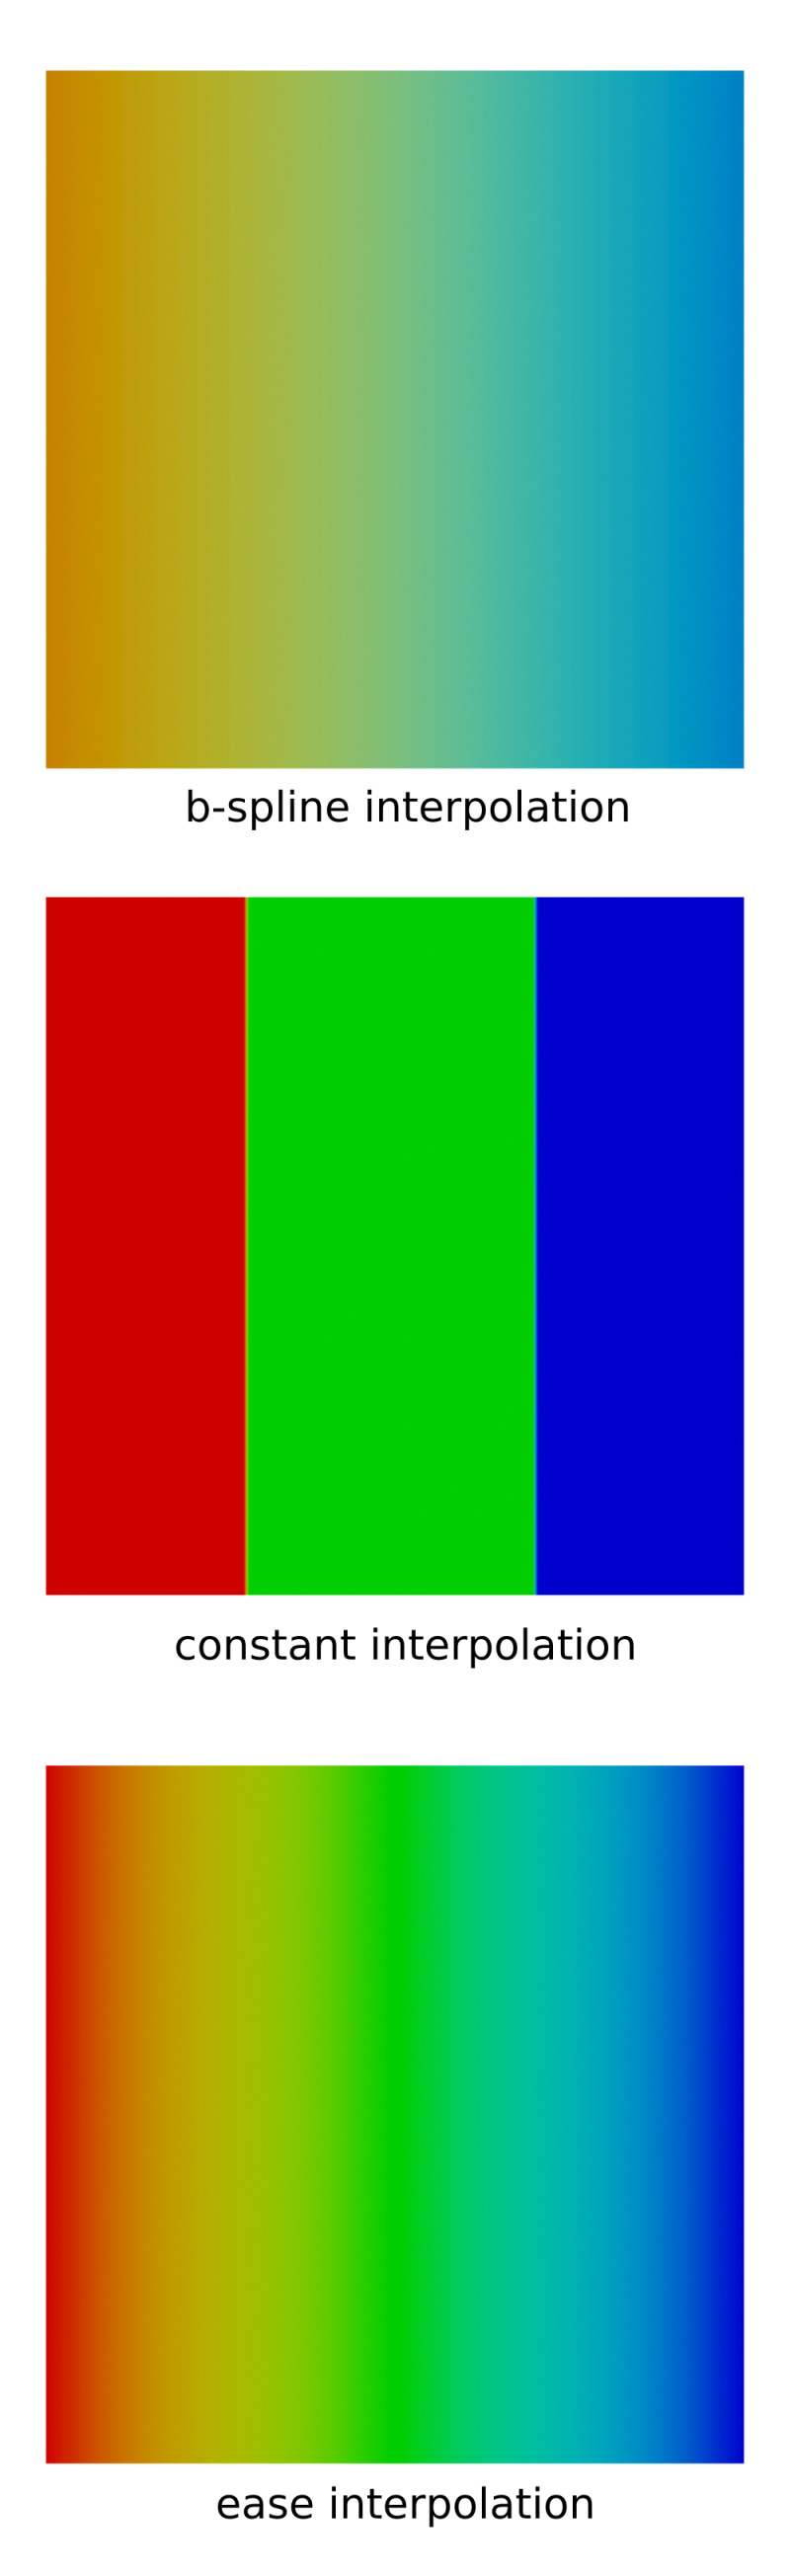 interpolation.jpg